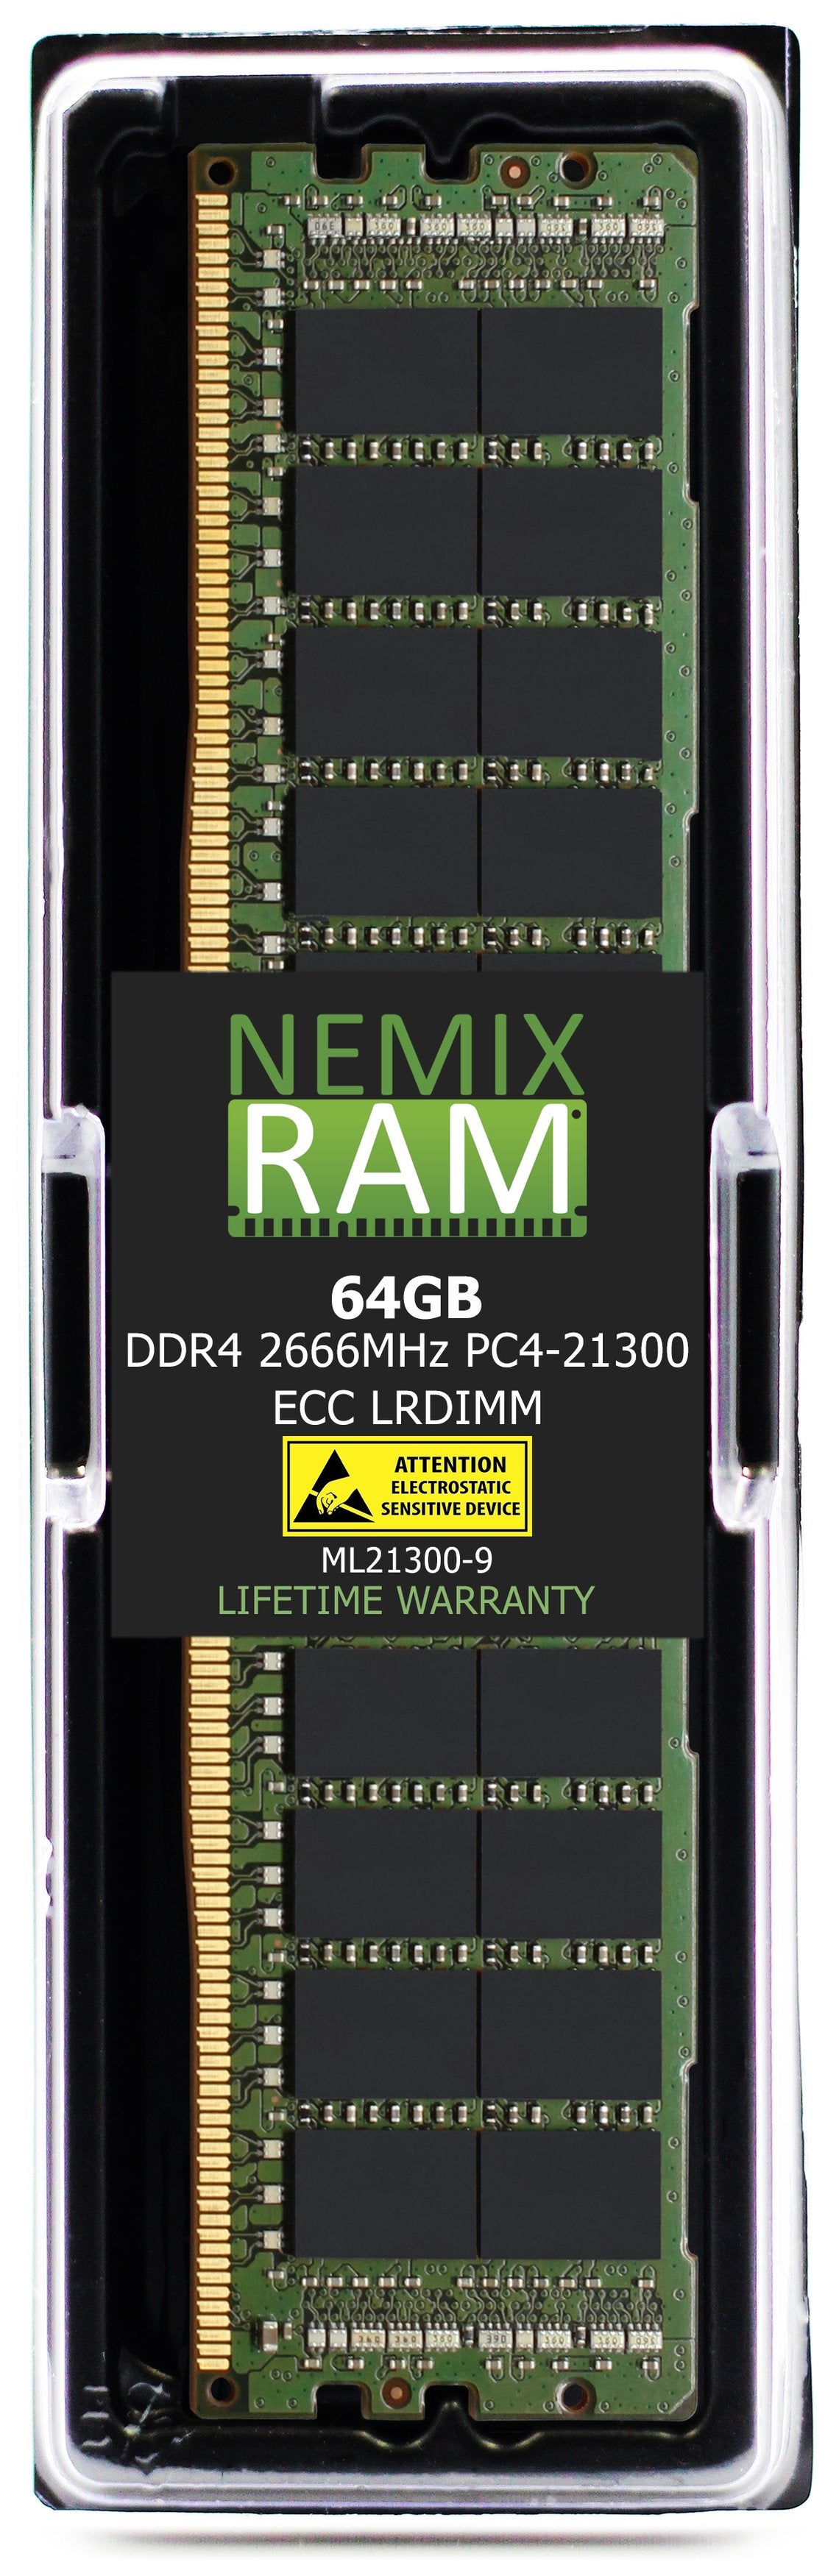 Hynix HMAA8GL7MMR4N-VJ 64GB DDR4 2666MHZ PC4-21300 LRDIMM Compatible Memory Module